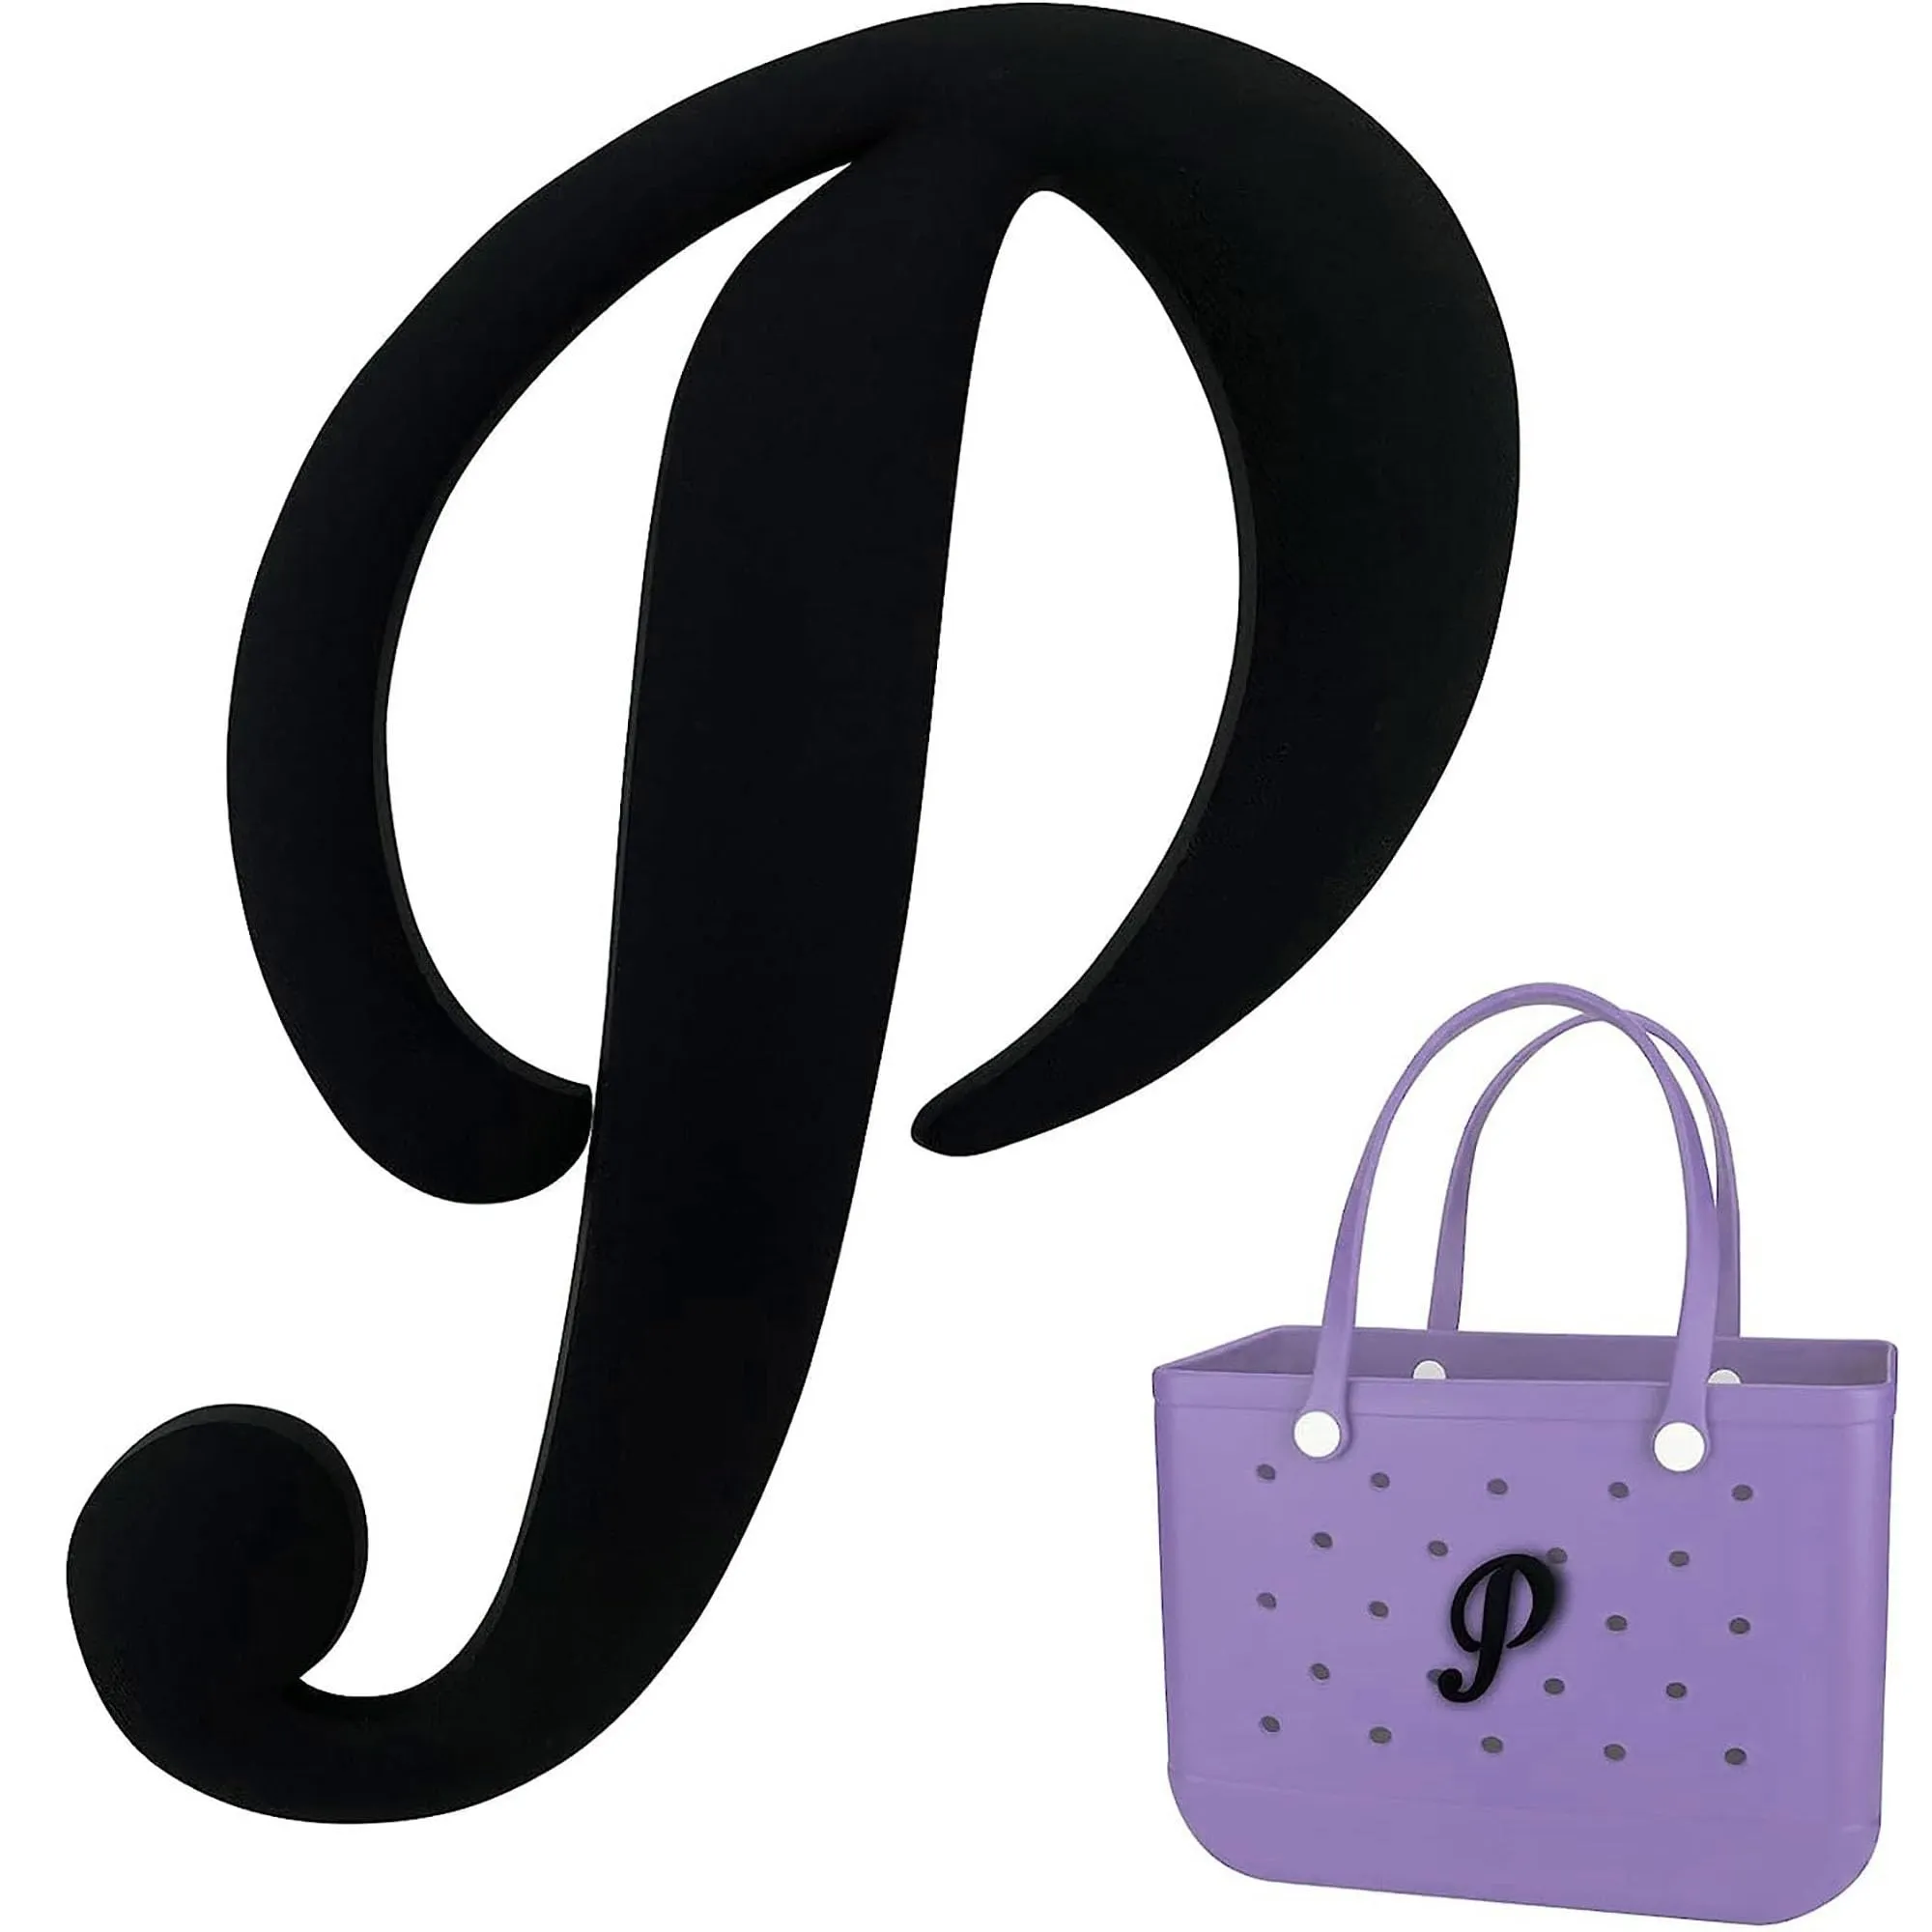 bag charms for bogg bag decorative alphabet lettering compatible with bogg bags alphabet letters for bogg bag accessories s